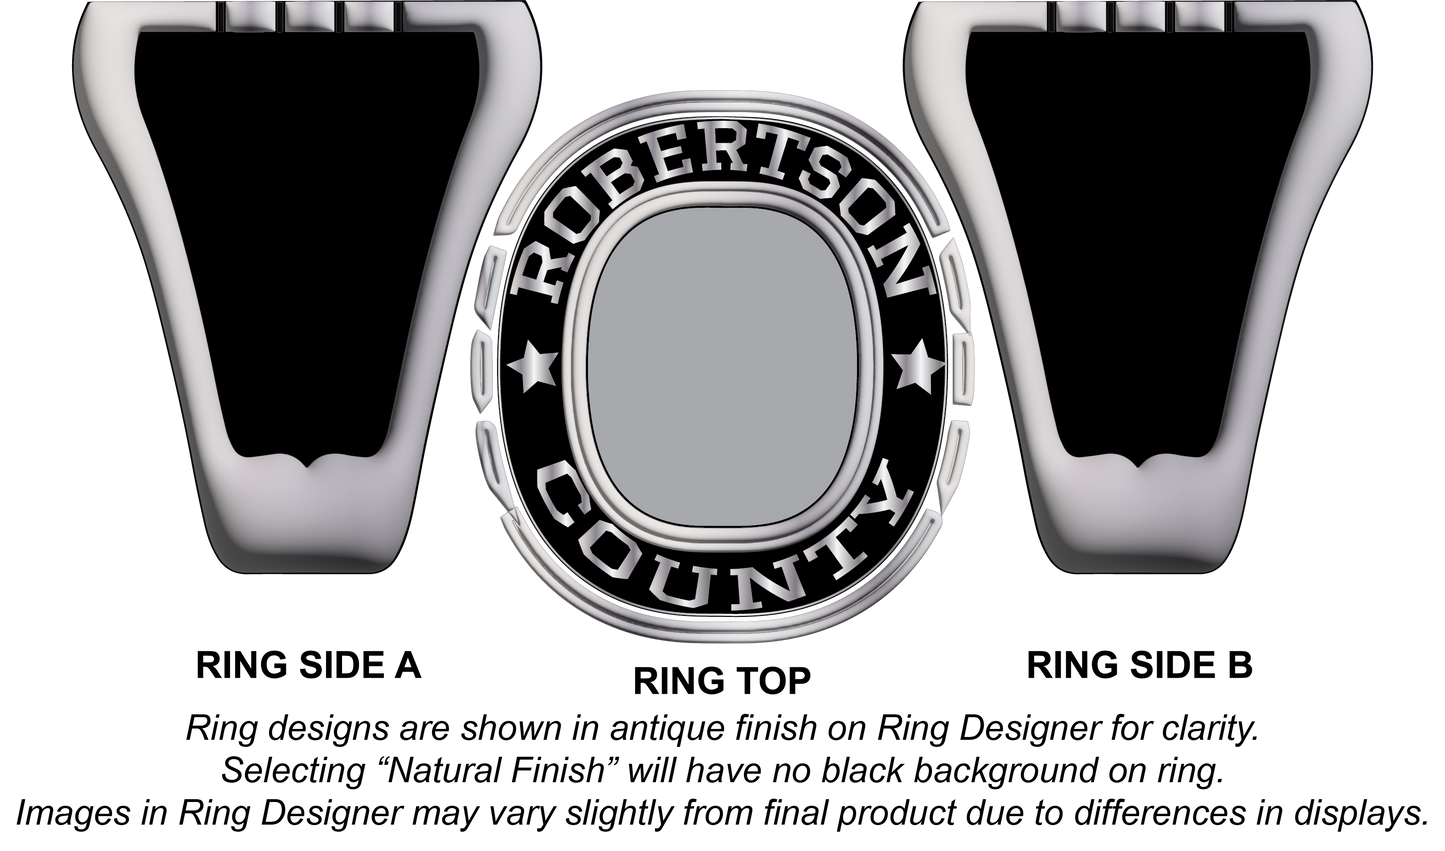 Rocket - Robertson County School Class Ring